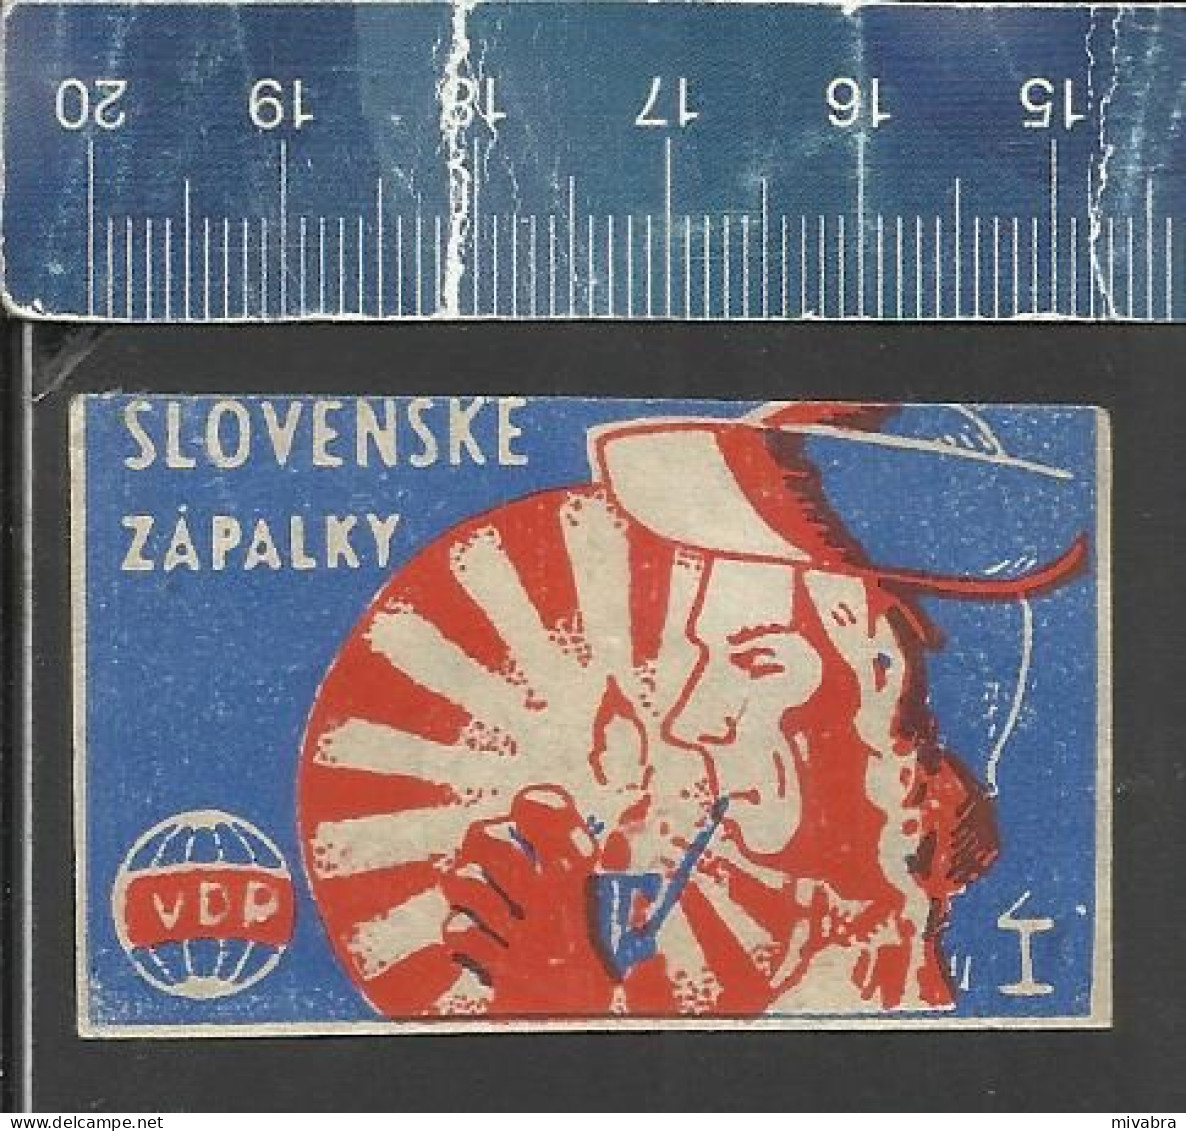 SLOVENSKE ZAPALKY VDP I ( MAN LICHTING A PIPE ) - OLD VINTAGE CZECHOSLOVAKIAN MATCHBOX LABEL - Matchbox Labels